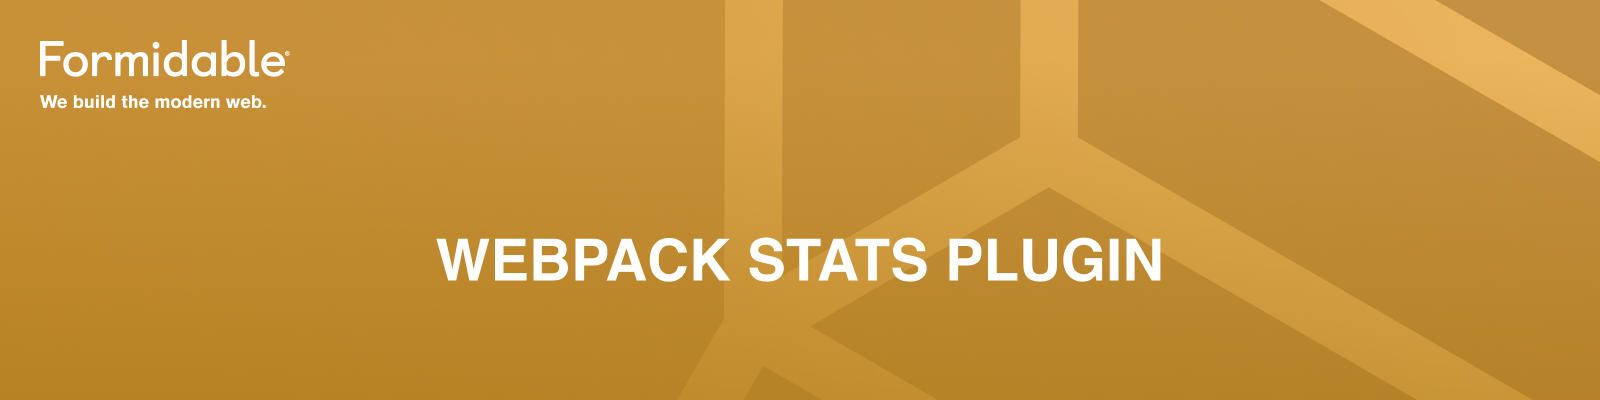 Webpack Stats Plugin — Formidable, We build the modern web